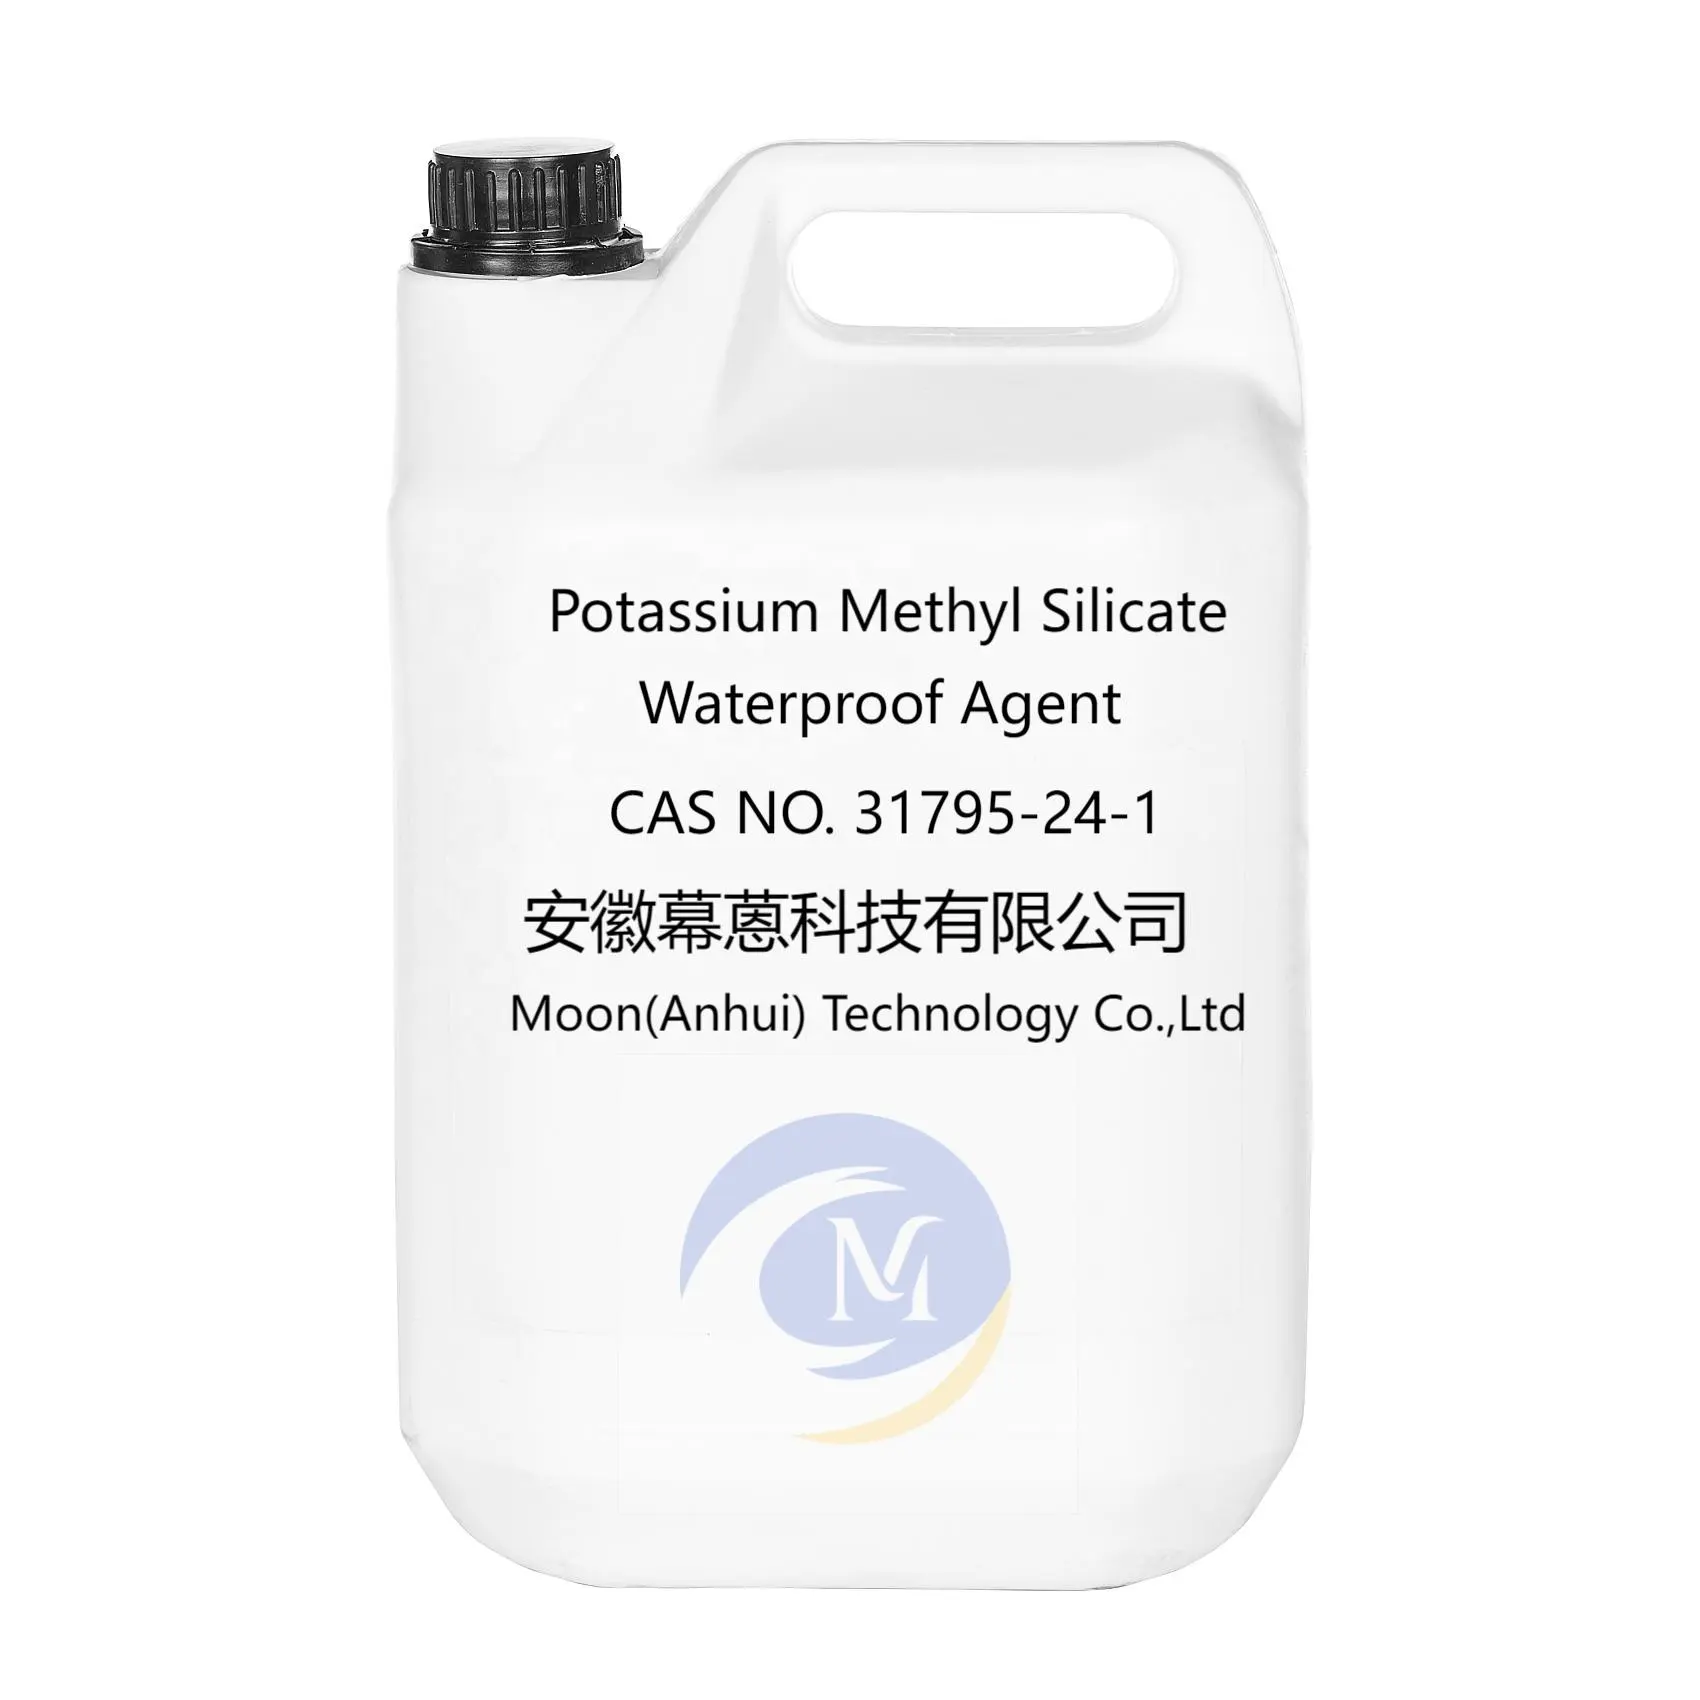 Productos para mampostería: agente impermeabilizante de solución de metilsiliconato de potasio resistente al agua